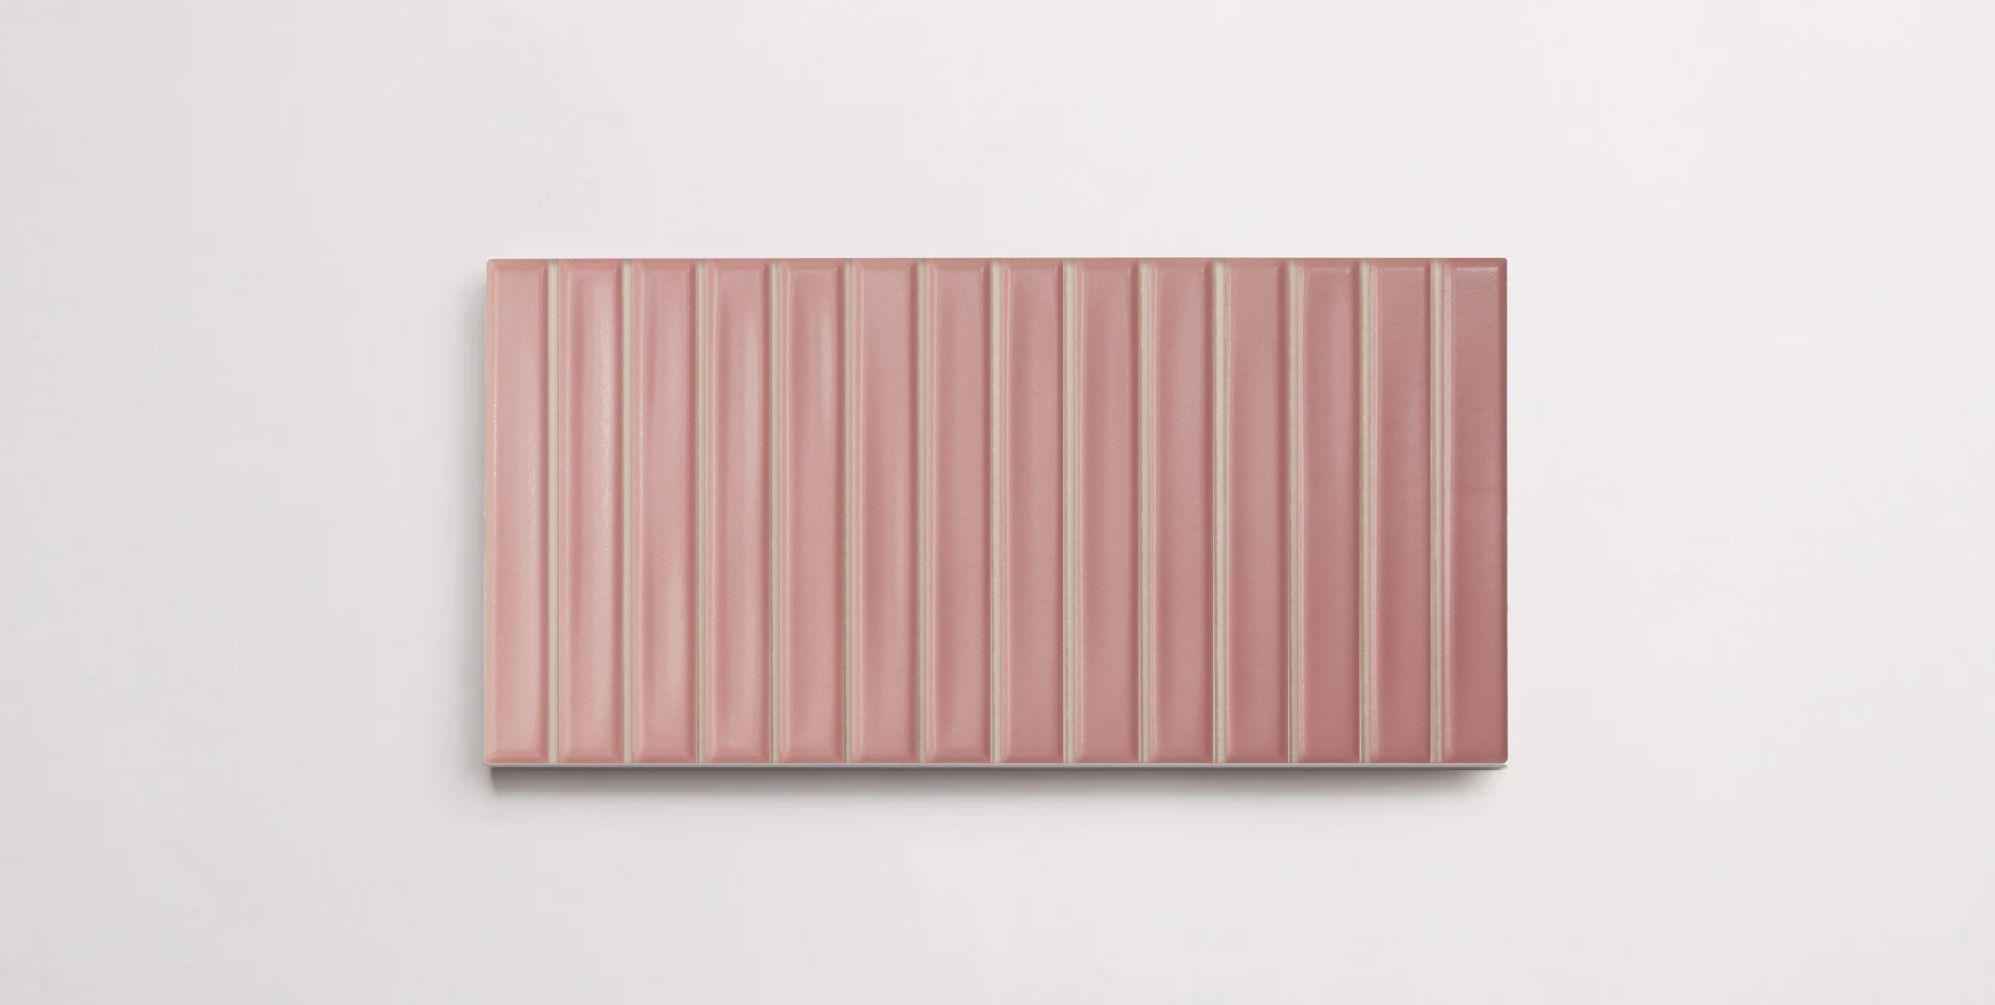 A single blush colored porcelain tile in a matte finish